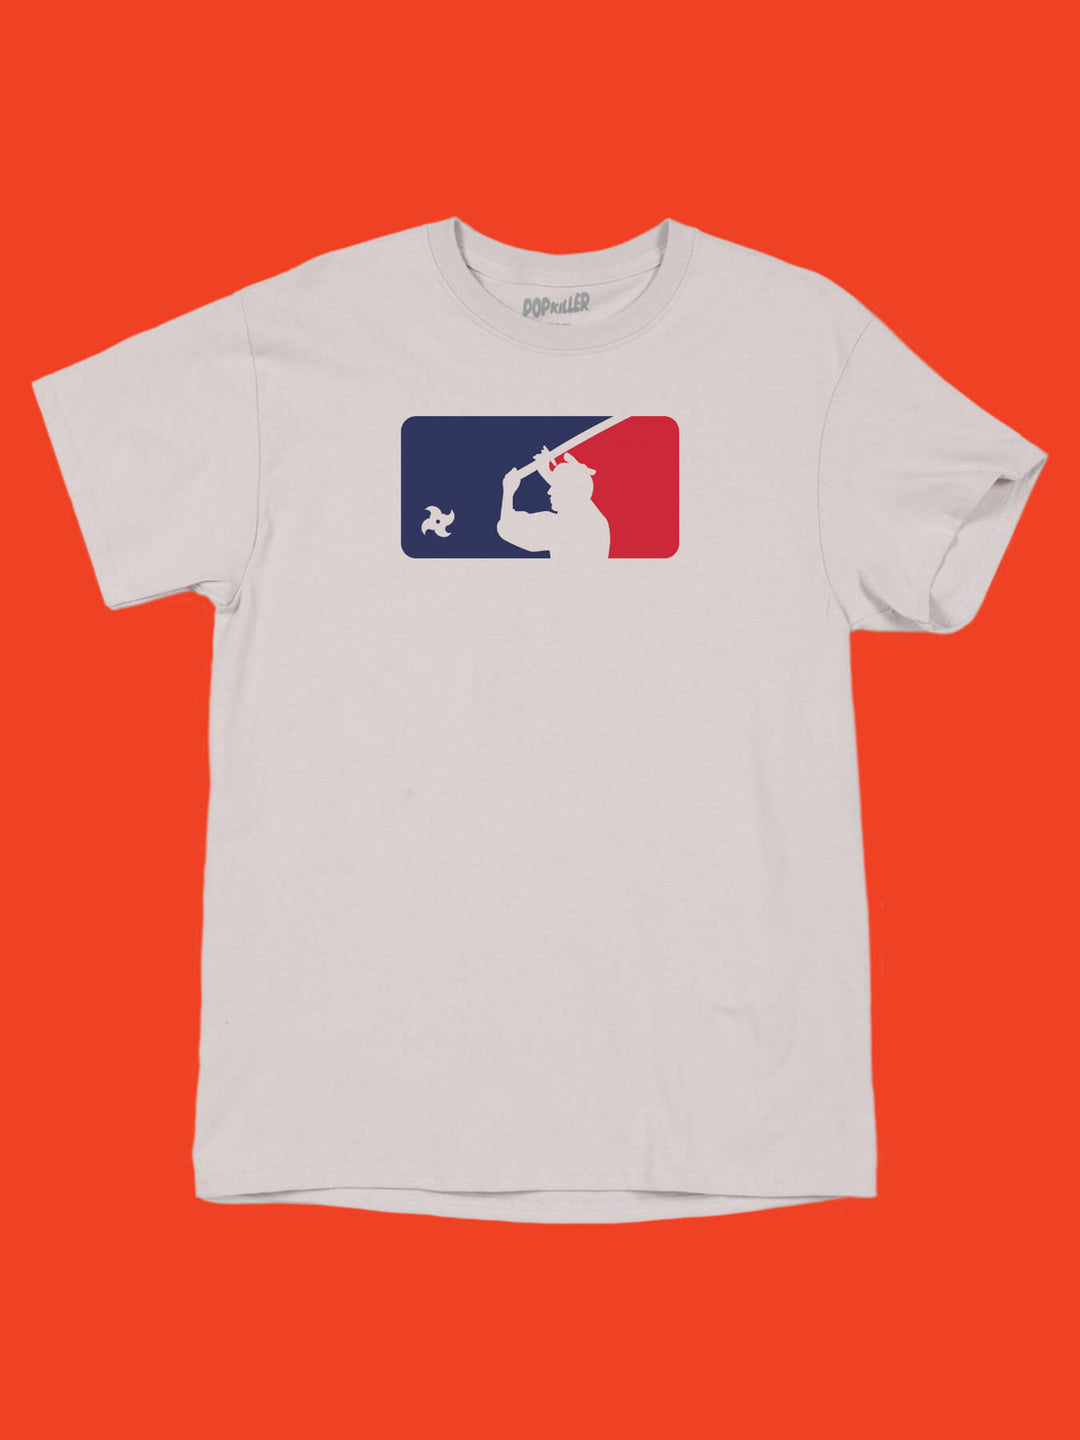 A grey t-shirt with a samurai parody of MLB.